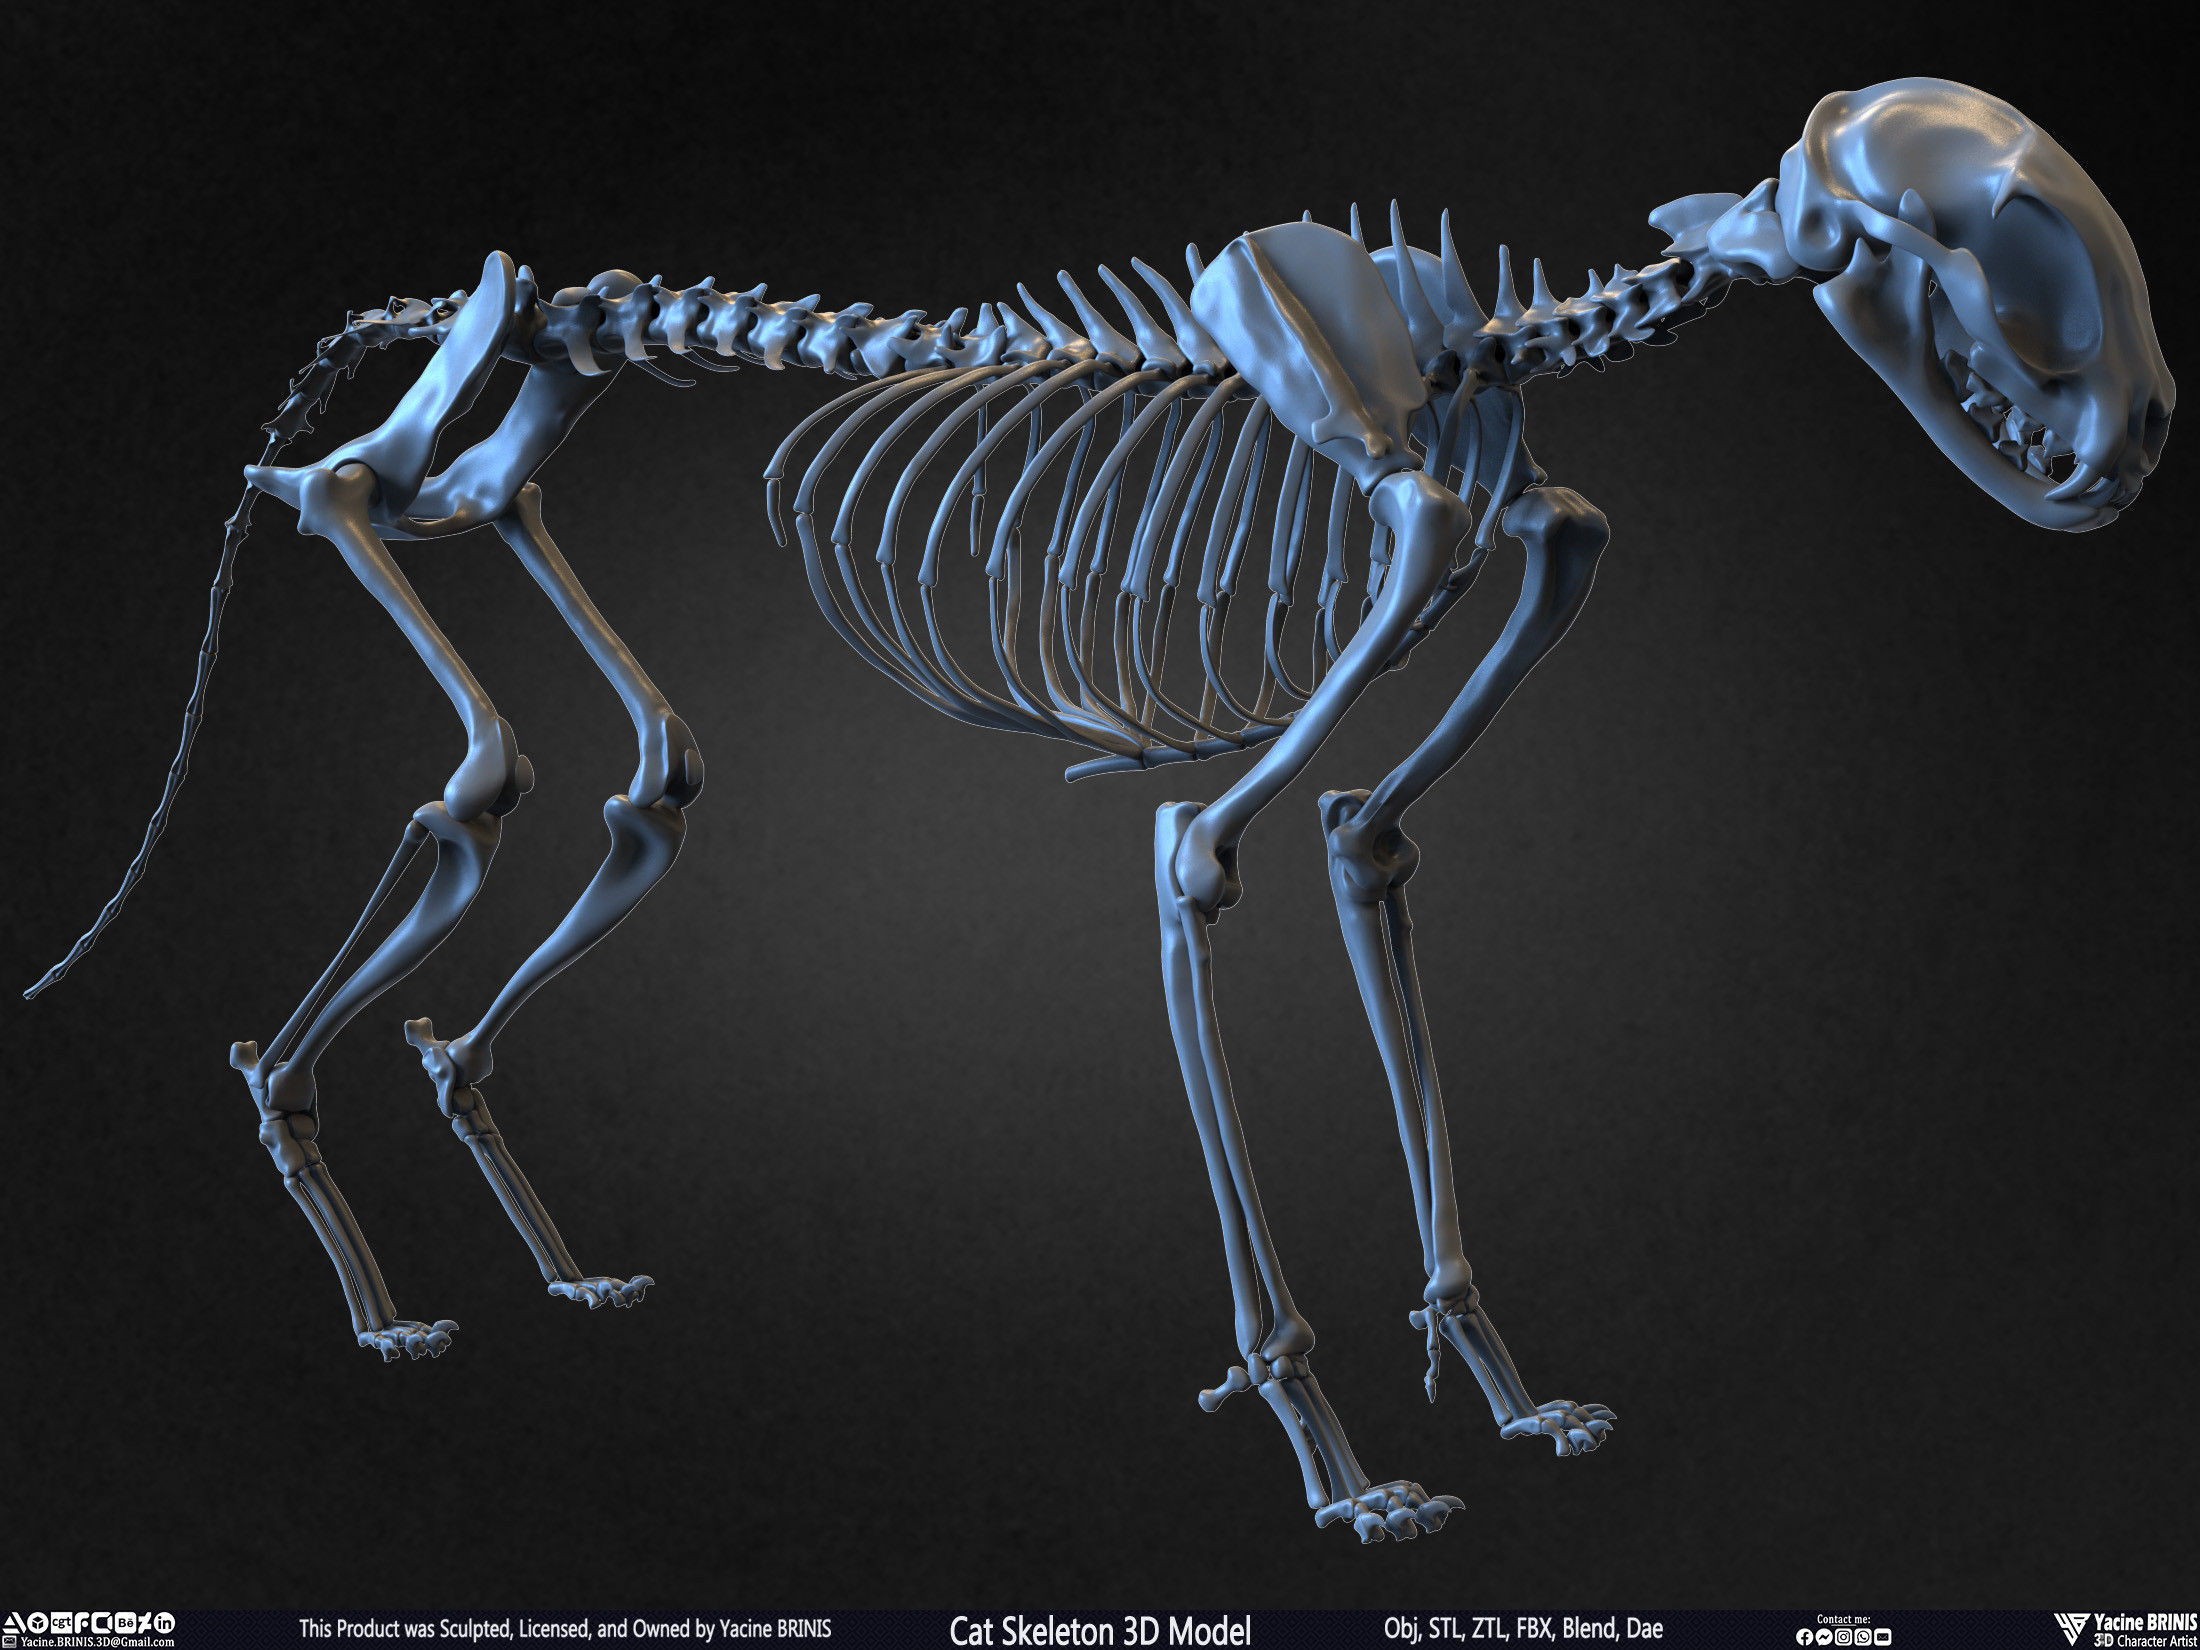 Highly Detailed Cat Skeleton 3D Model Sculpted by Yacine BRINIS Set 026